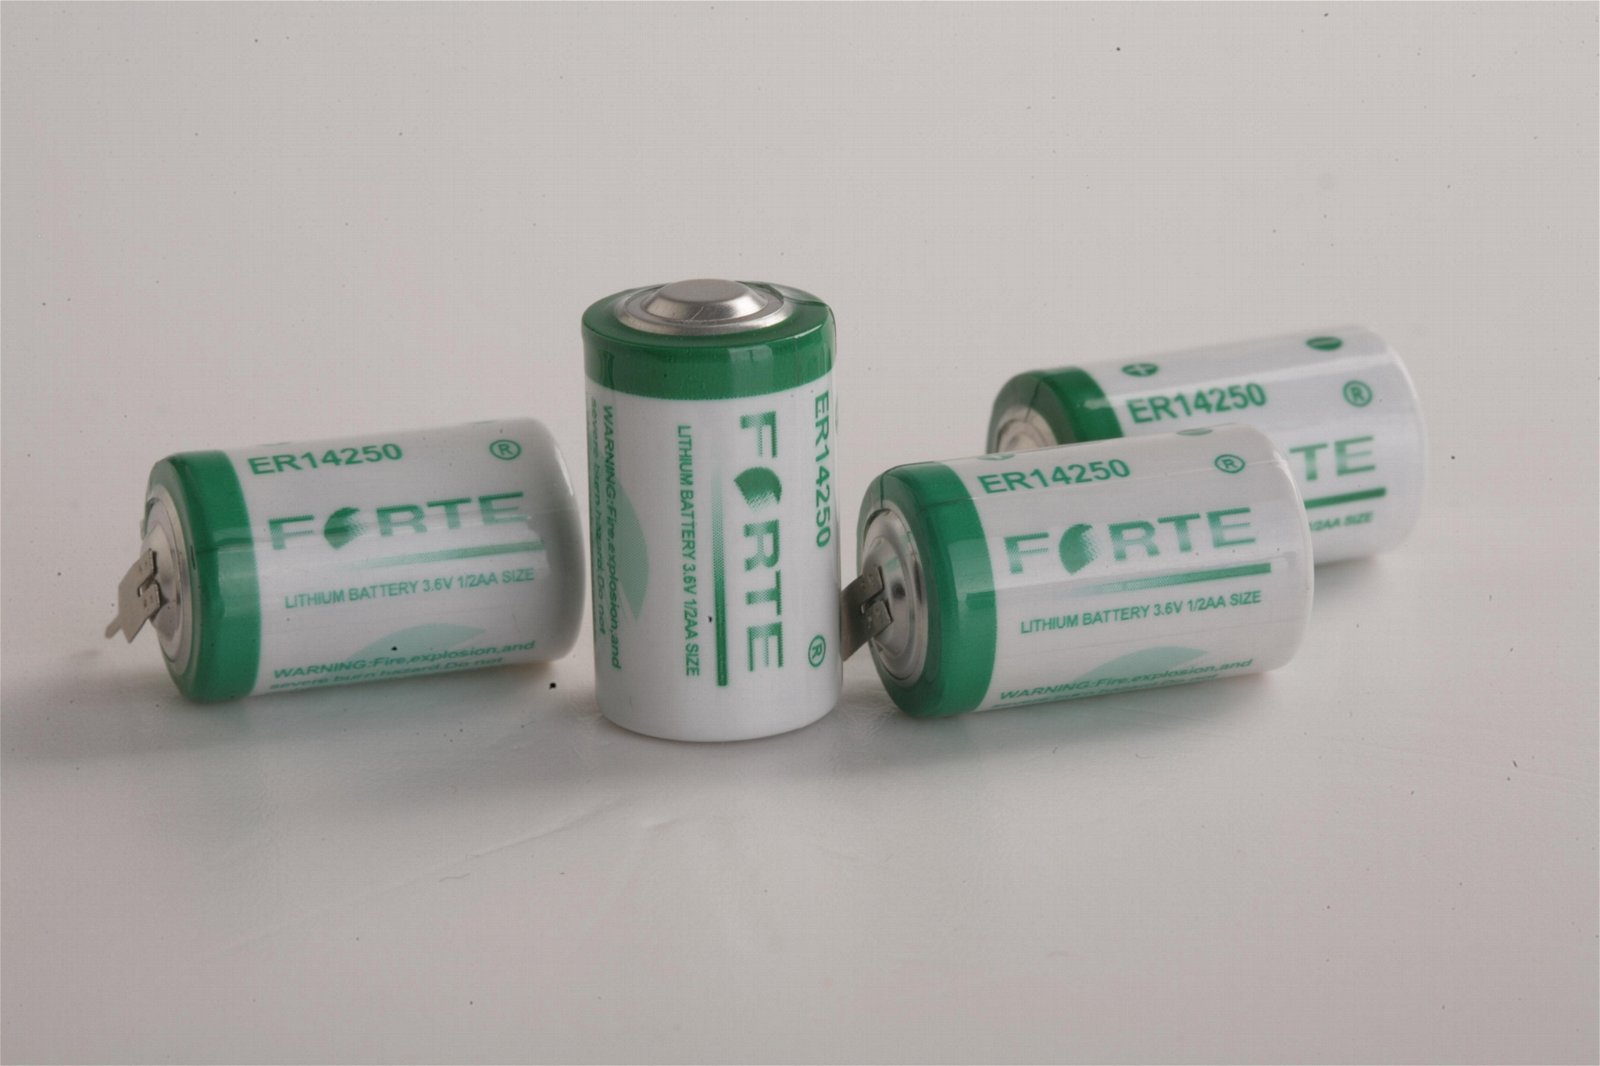 ER14250 一次鋰電池3.6V 1/2AA size  rfid電子標籤 5